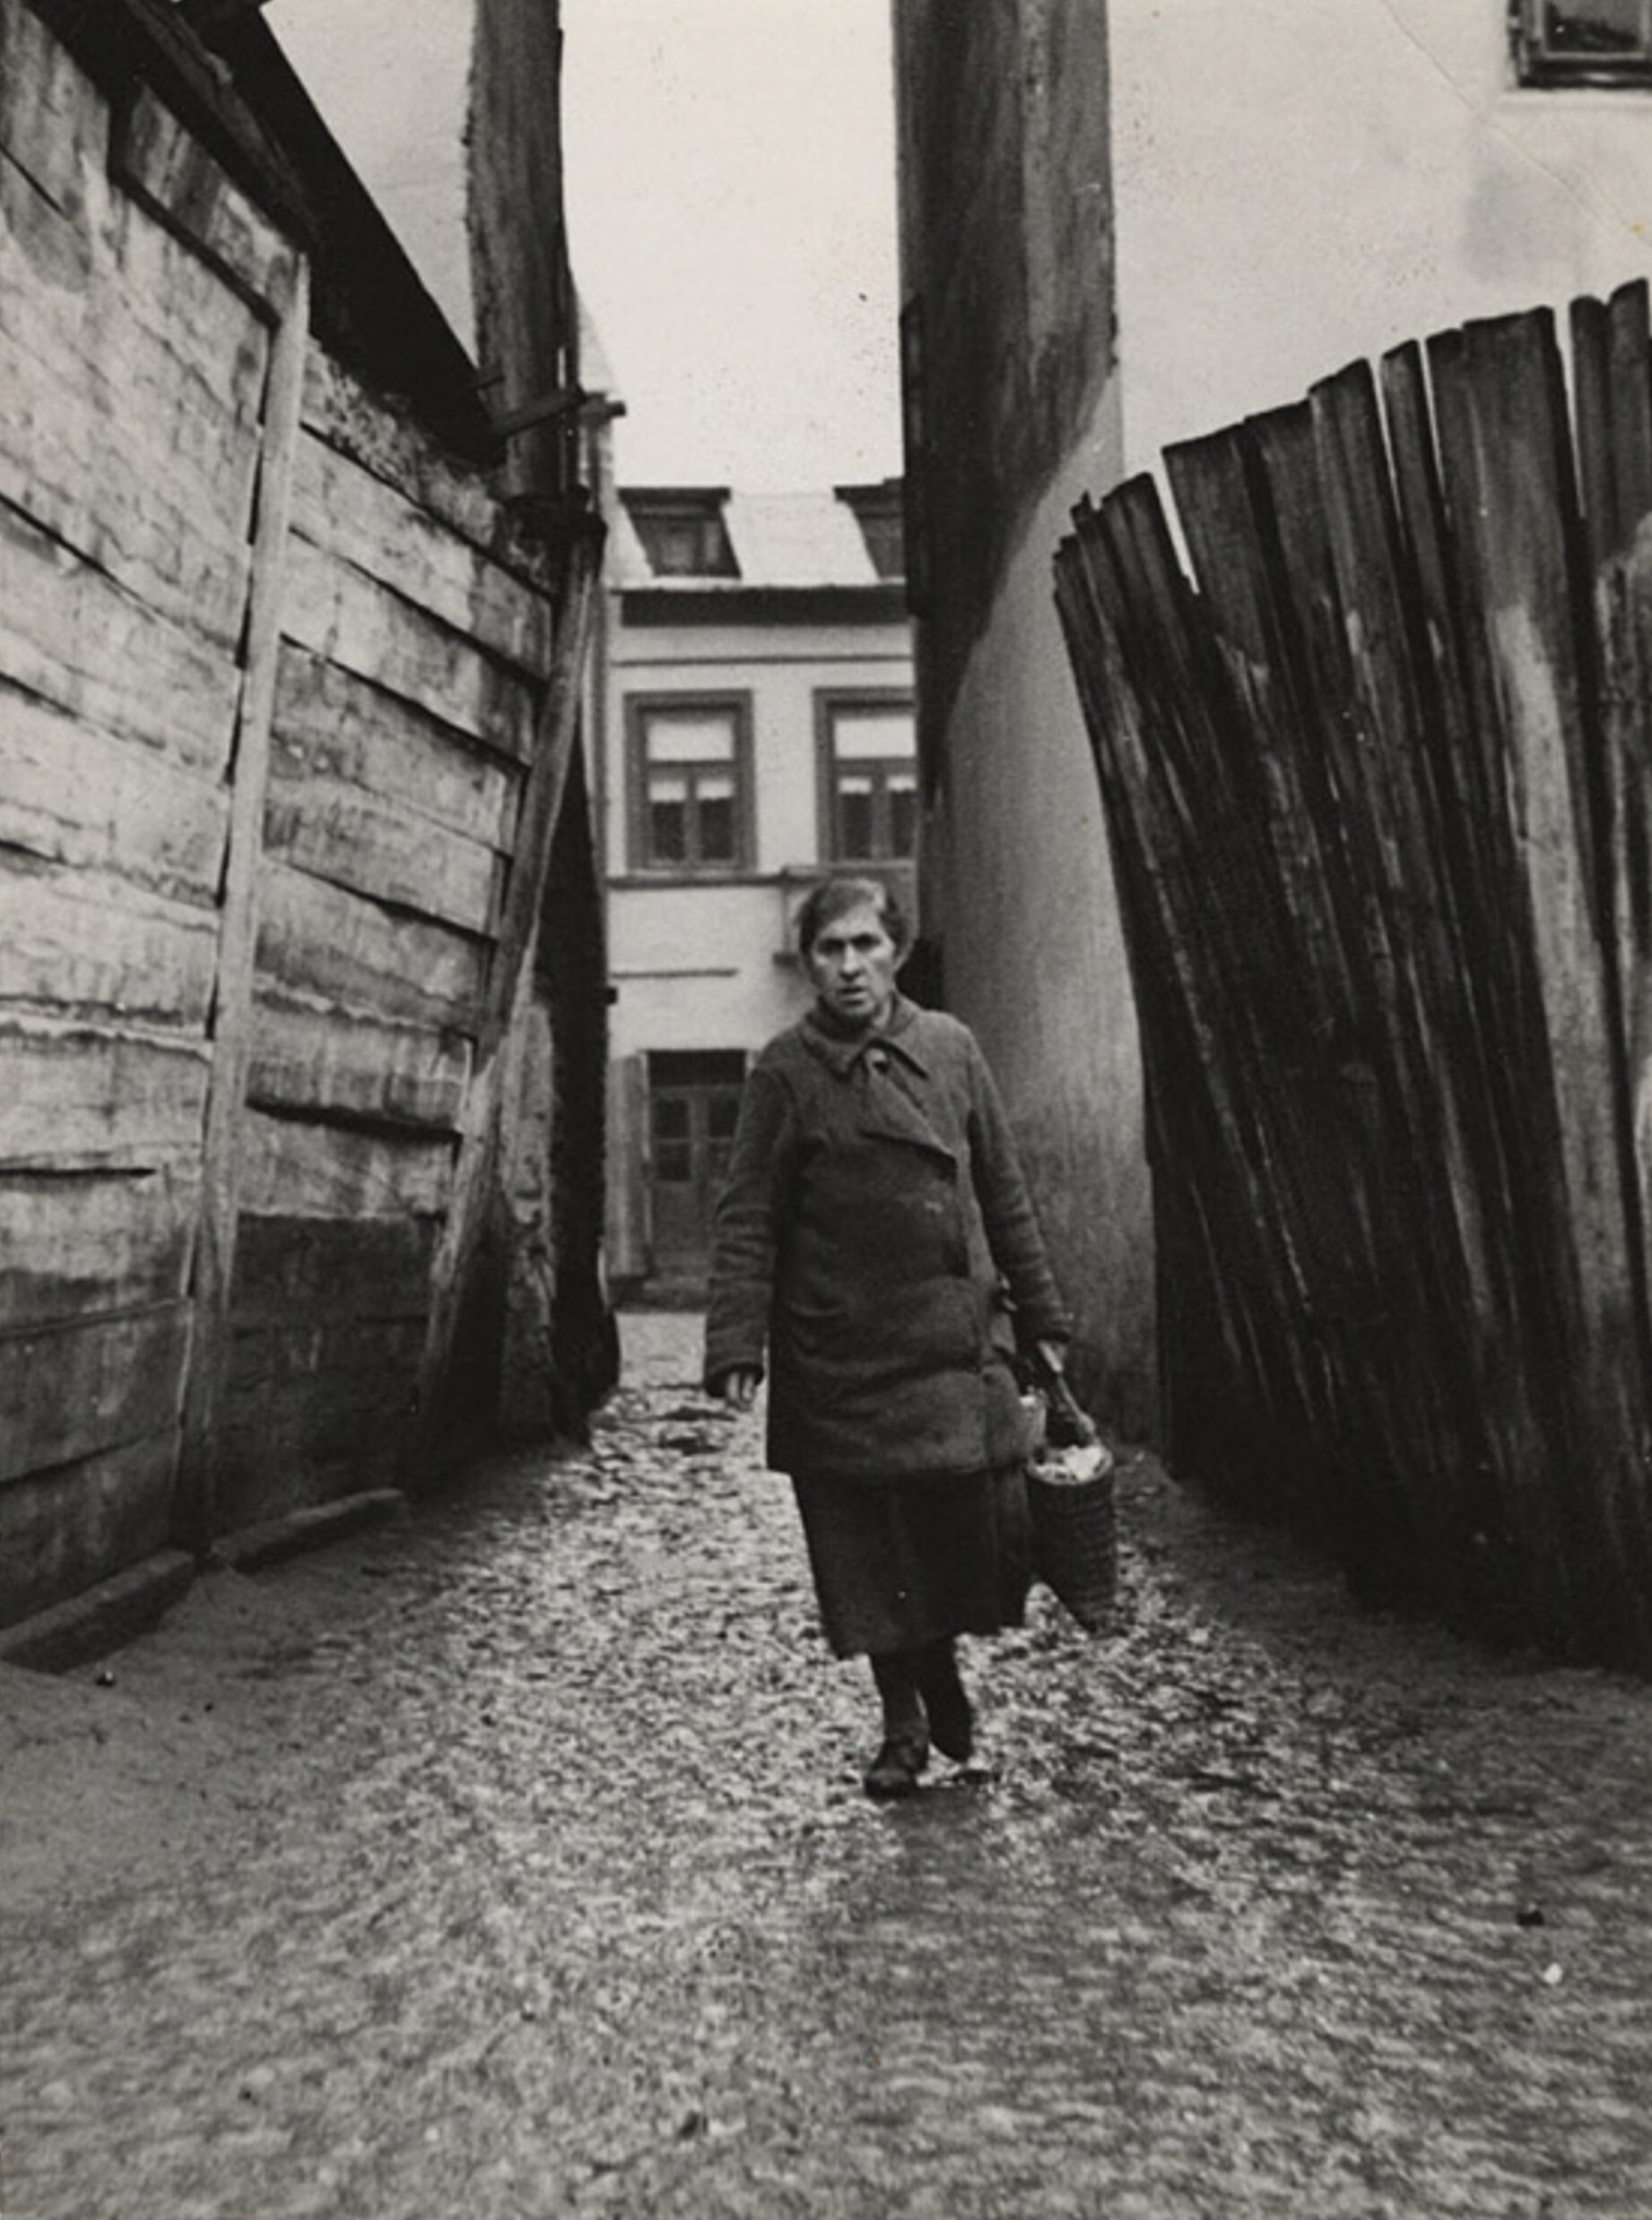 Домохозяйка возвращается домой, еврейский район Люблина, ок. 1935-38 гг. Фотограф Роман Вишняк